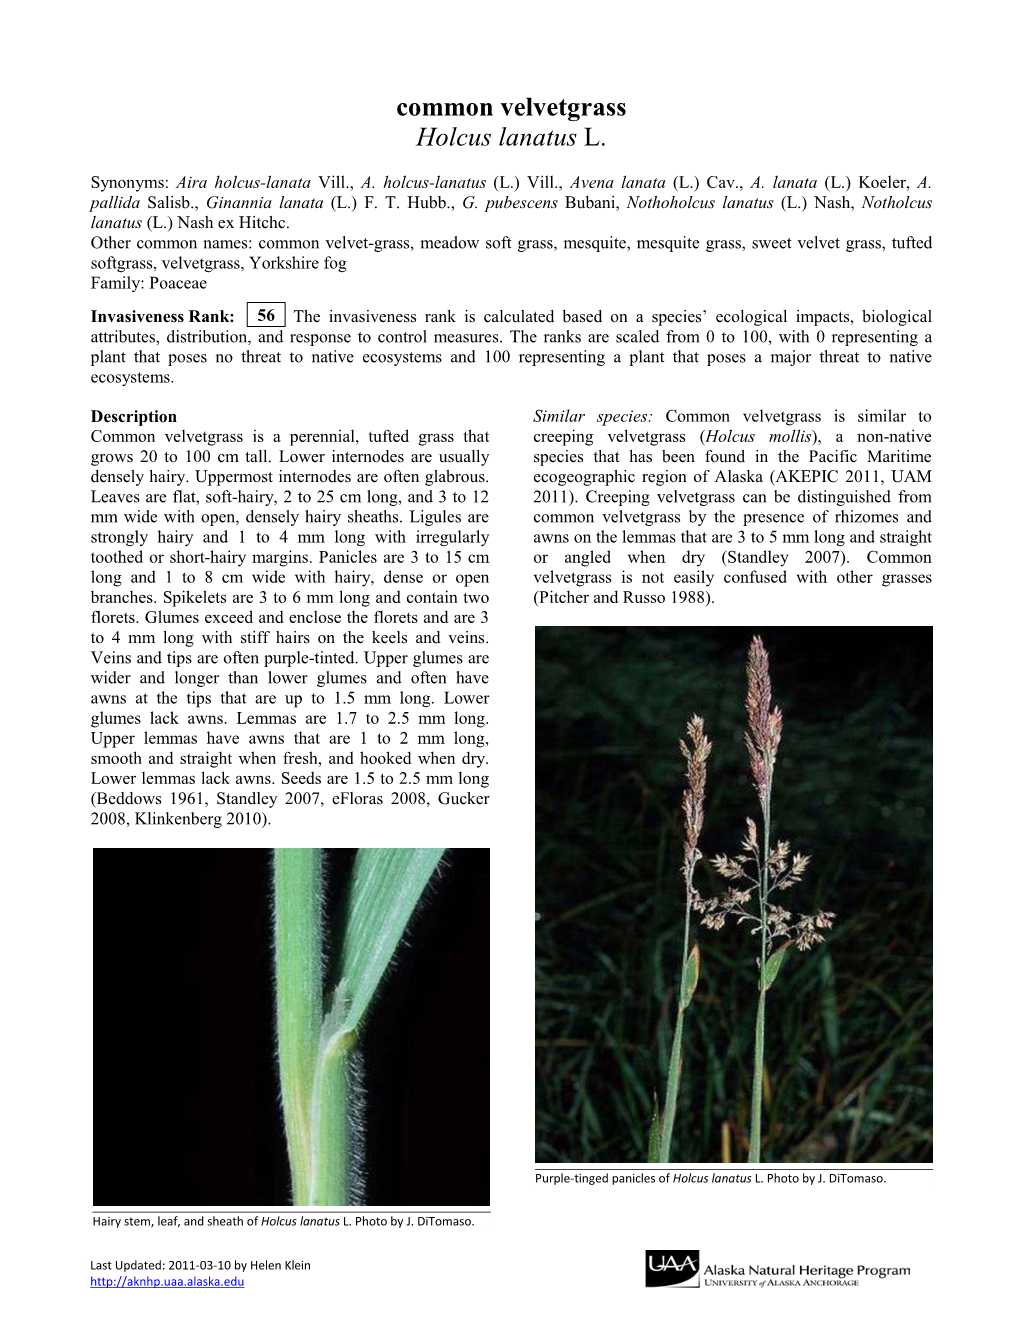 Common Velvetgrass Holcus Lanatus L